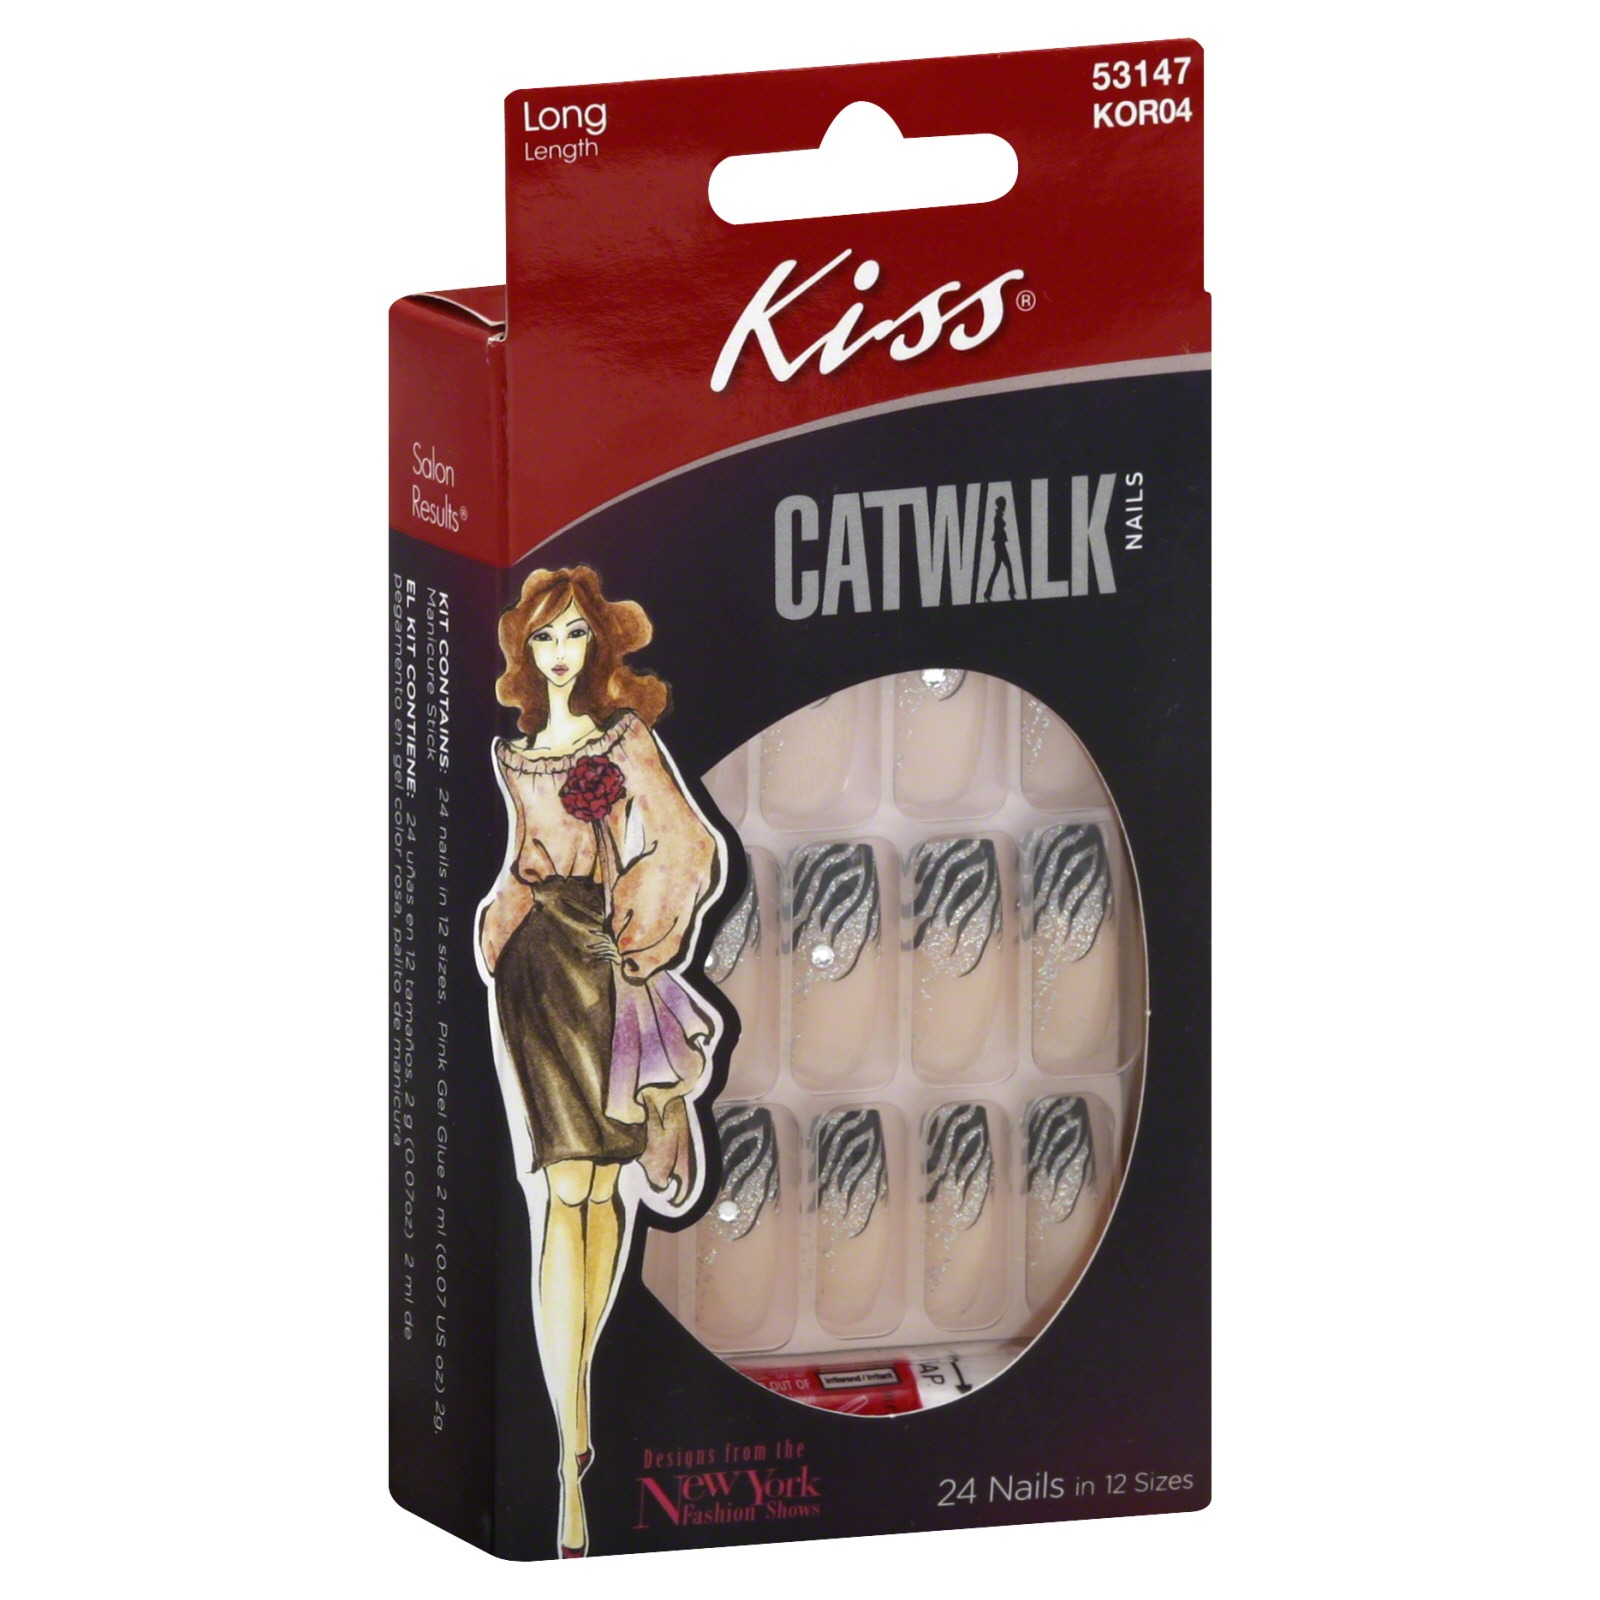 Kiss Catwalk Nail Kit, Long Length 1 kit